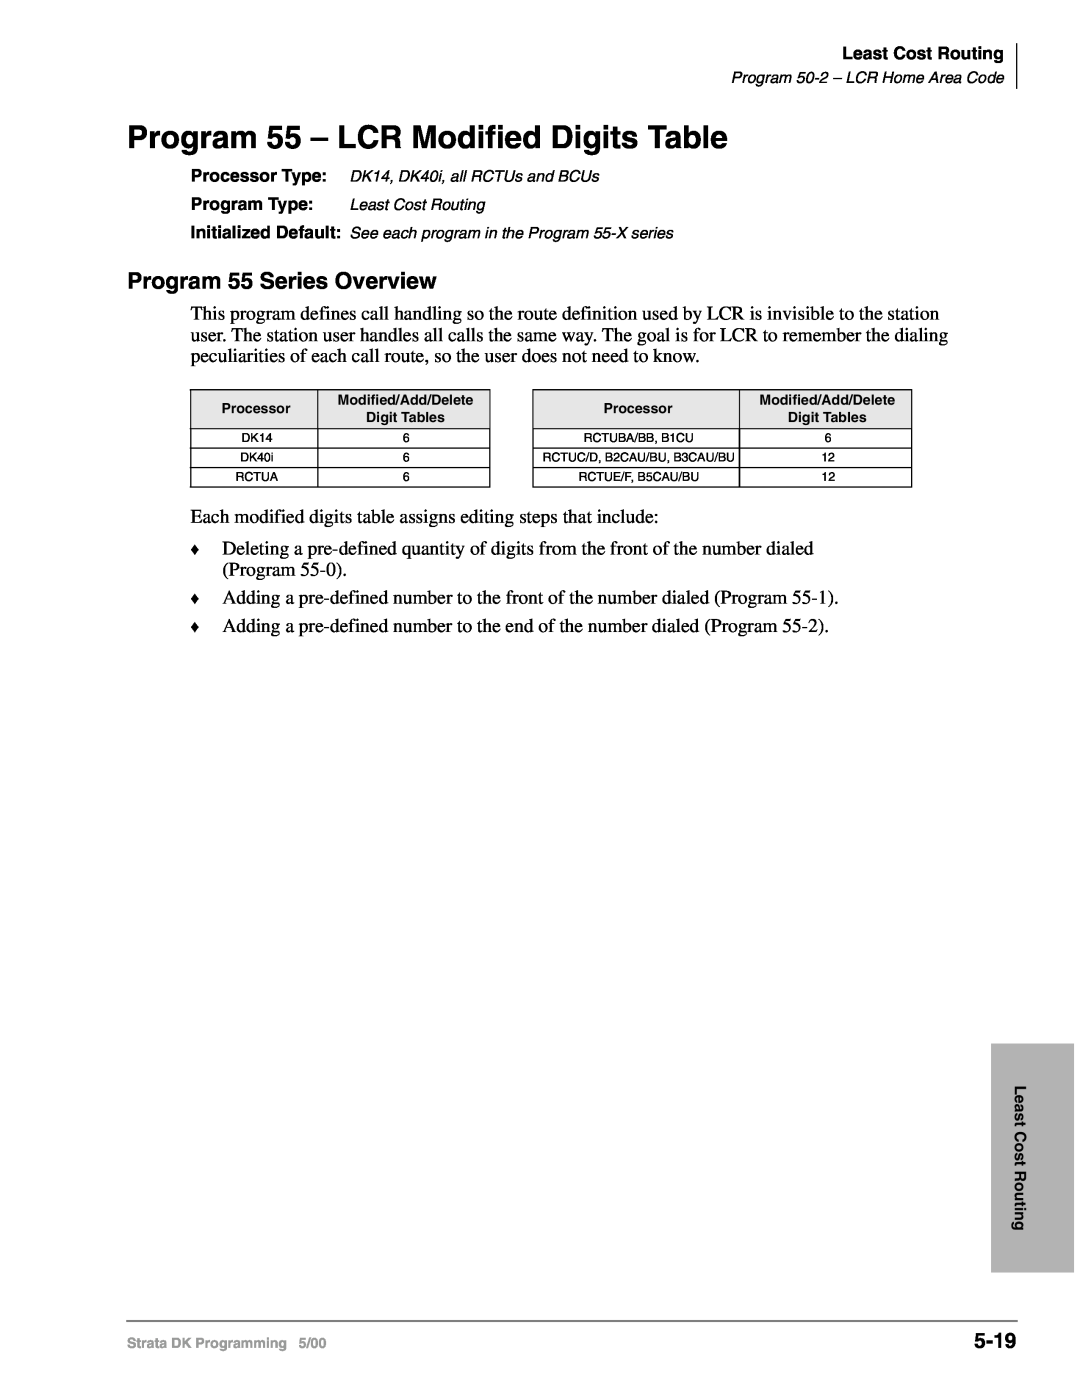 Toshiba dk14, DK40I, DK424I manual Program 55 – LCR Modified Digits Table, Program 55 Series Overview, 5-19 